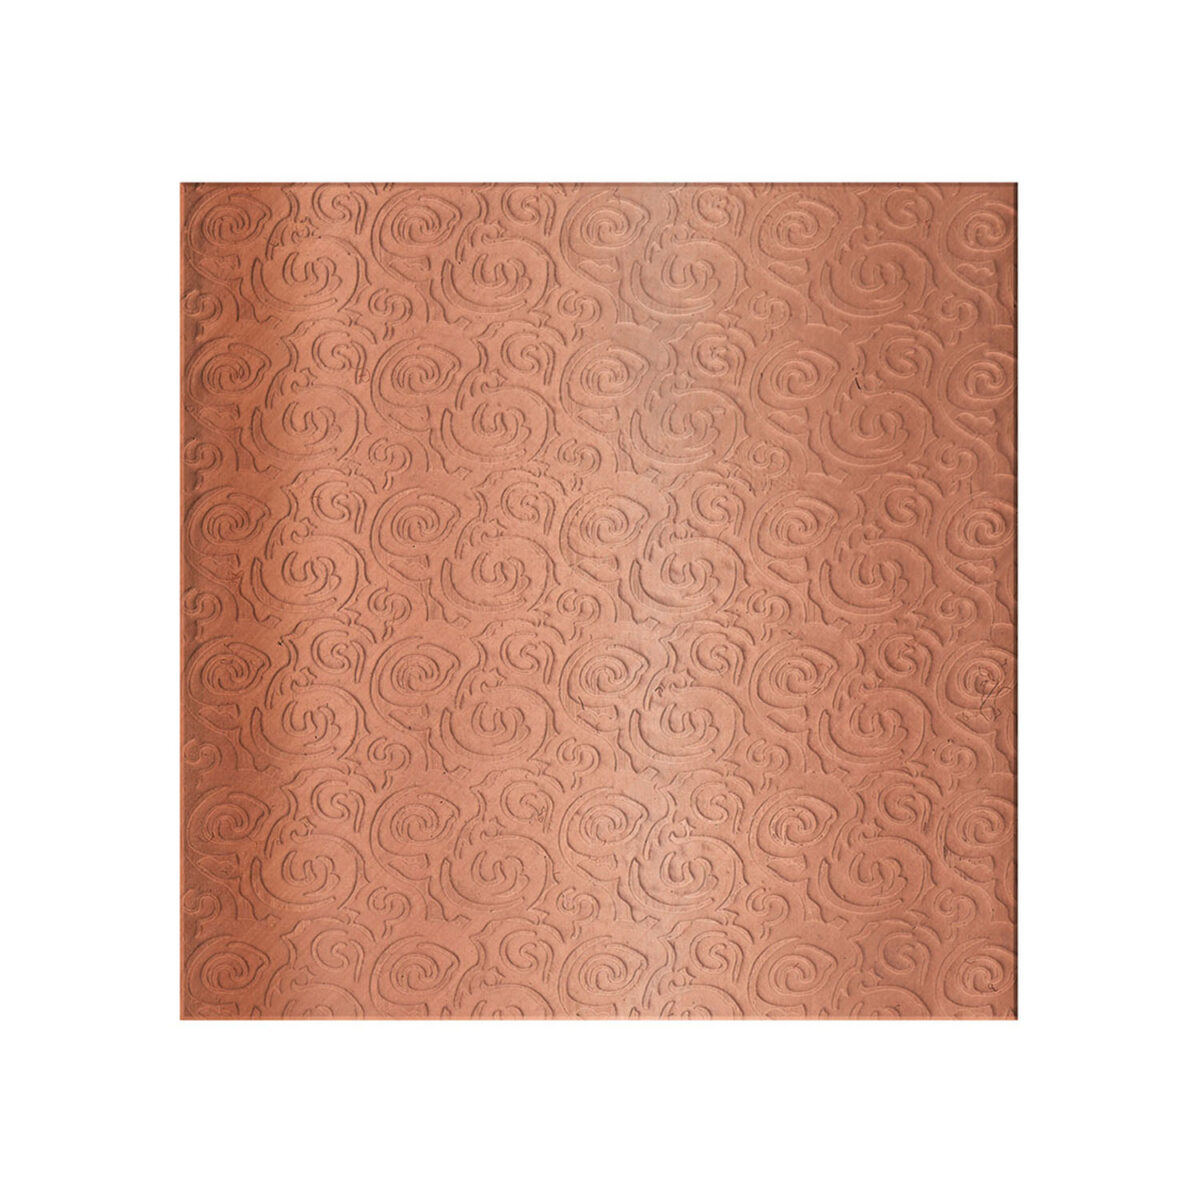 2109 swirls pattern plate 3